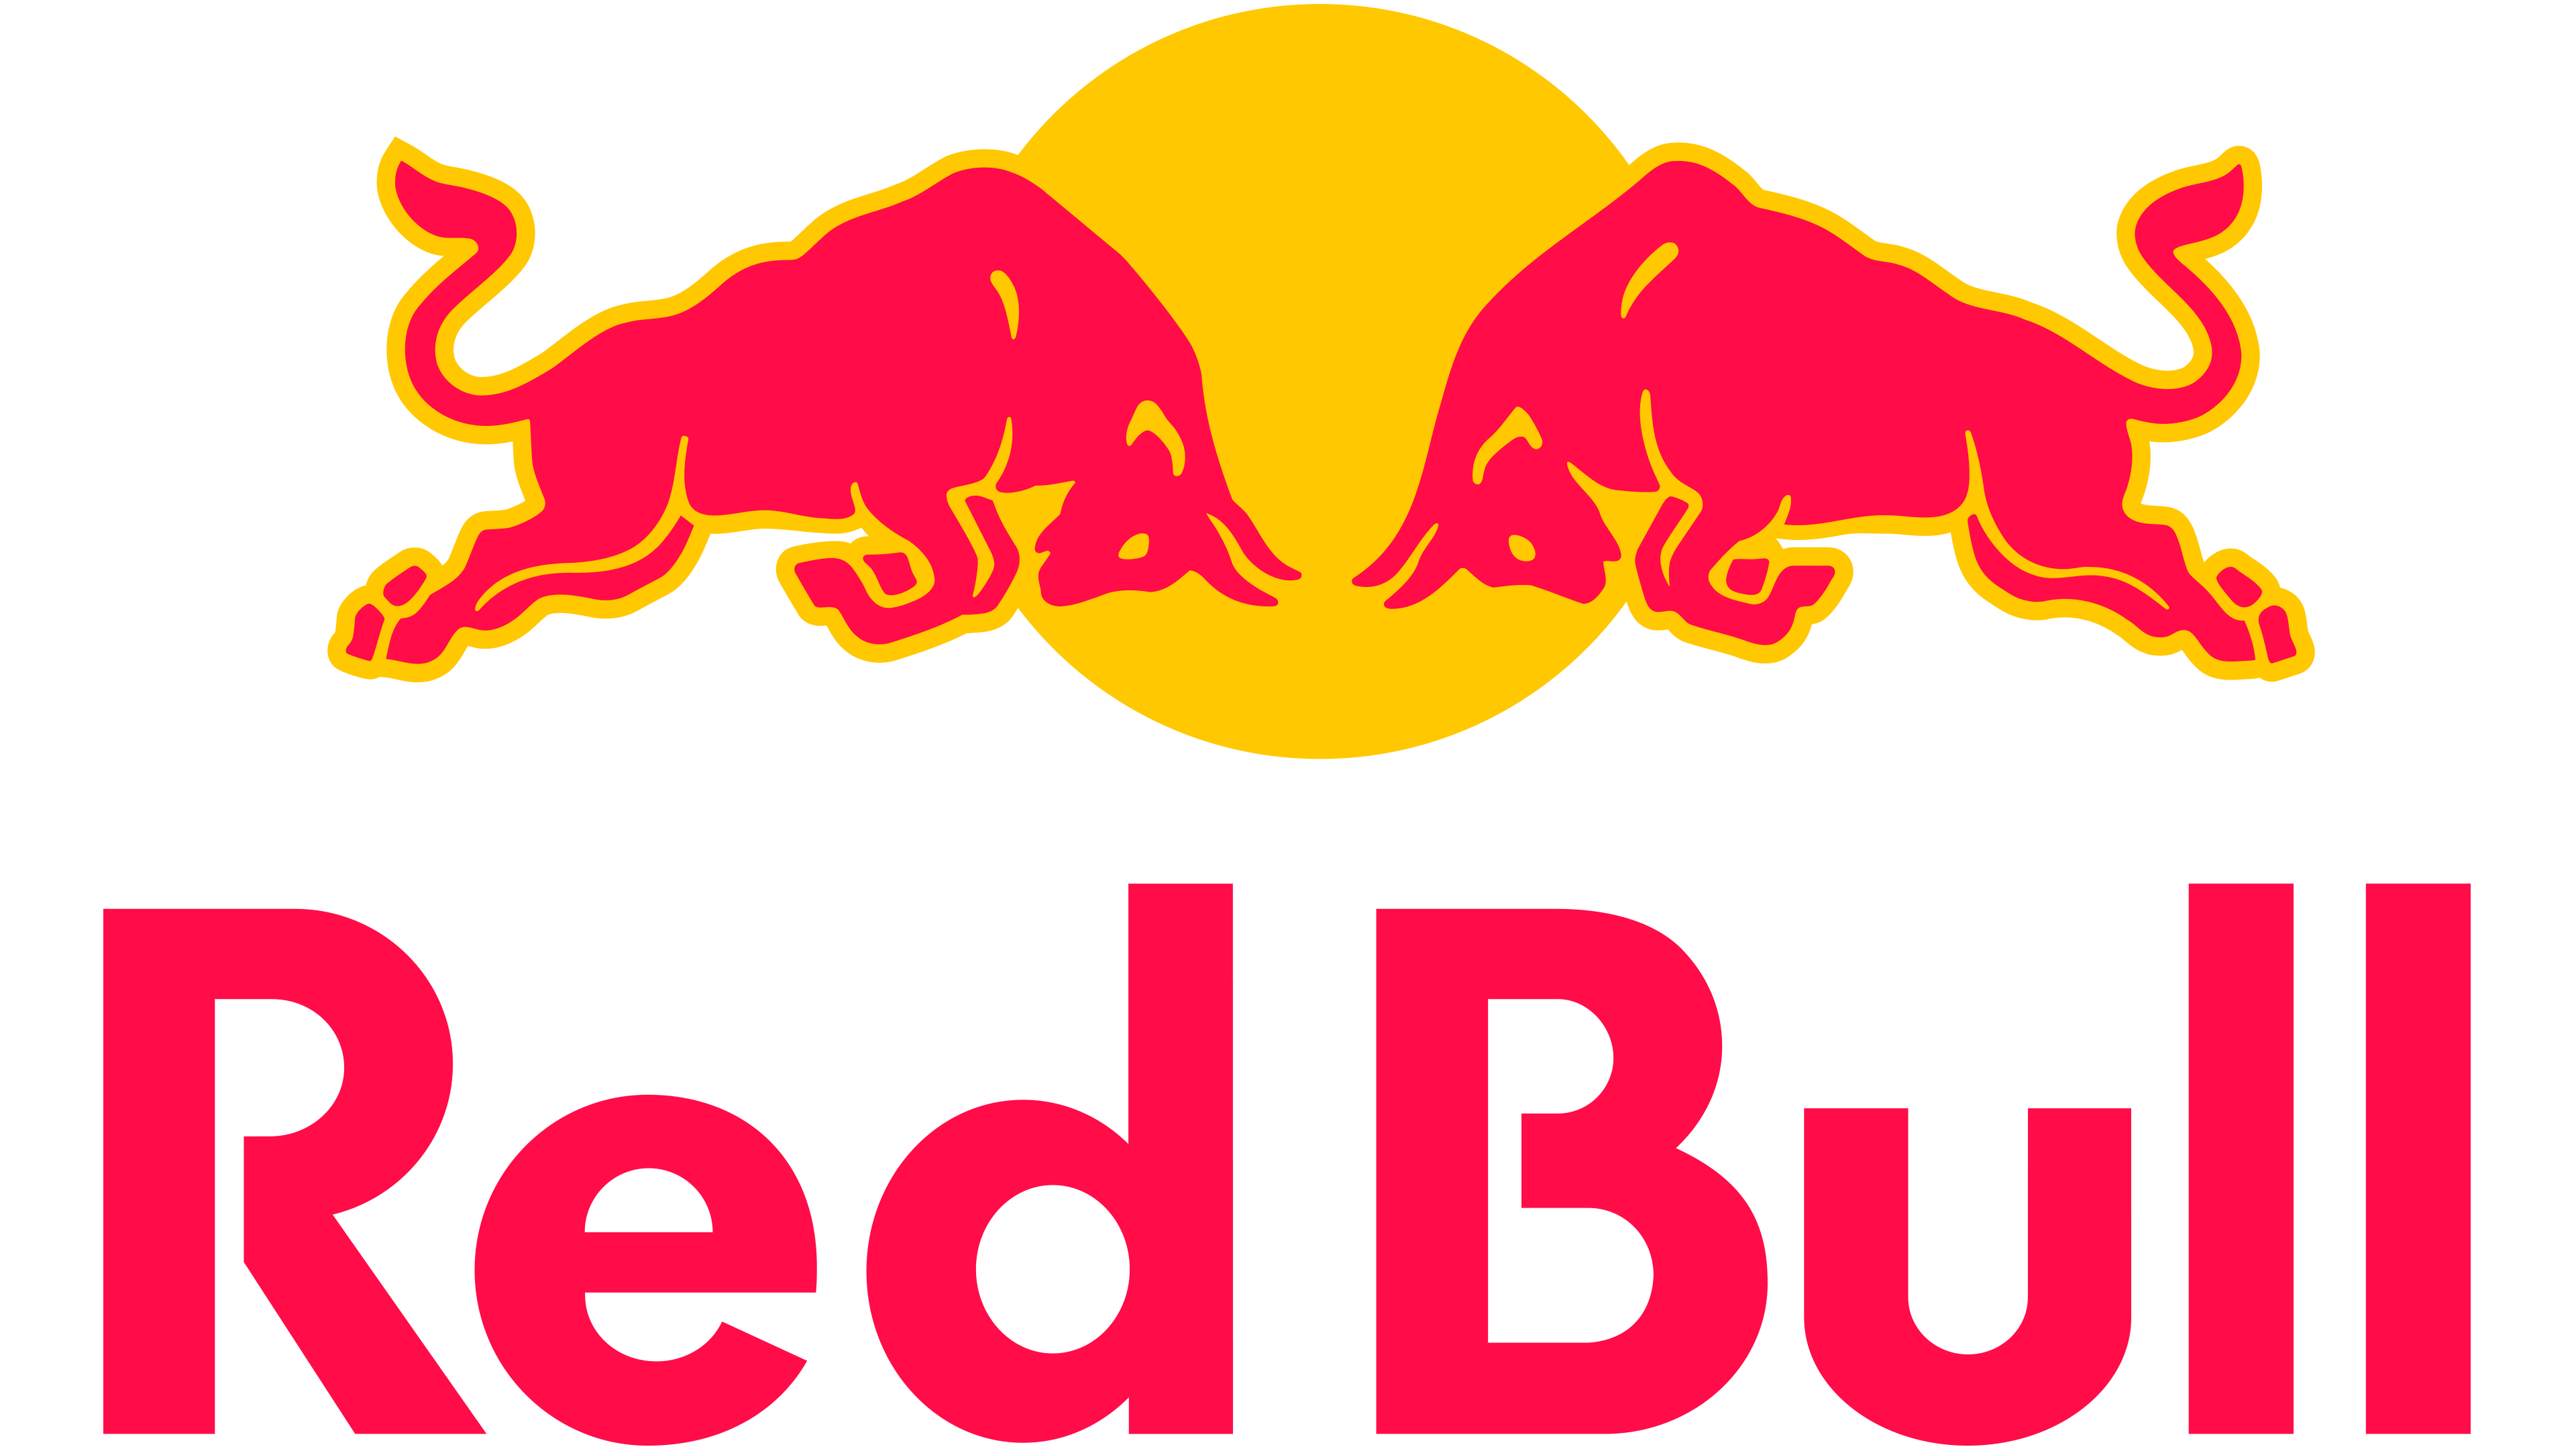 Red Bull Logo valor, história, PNG